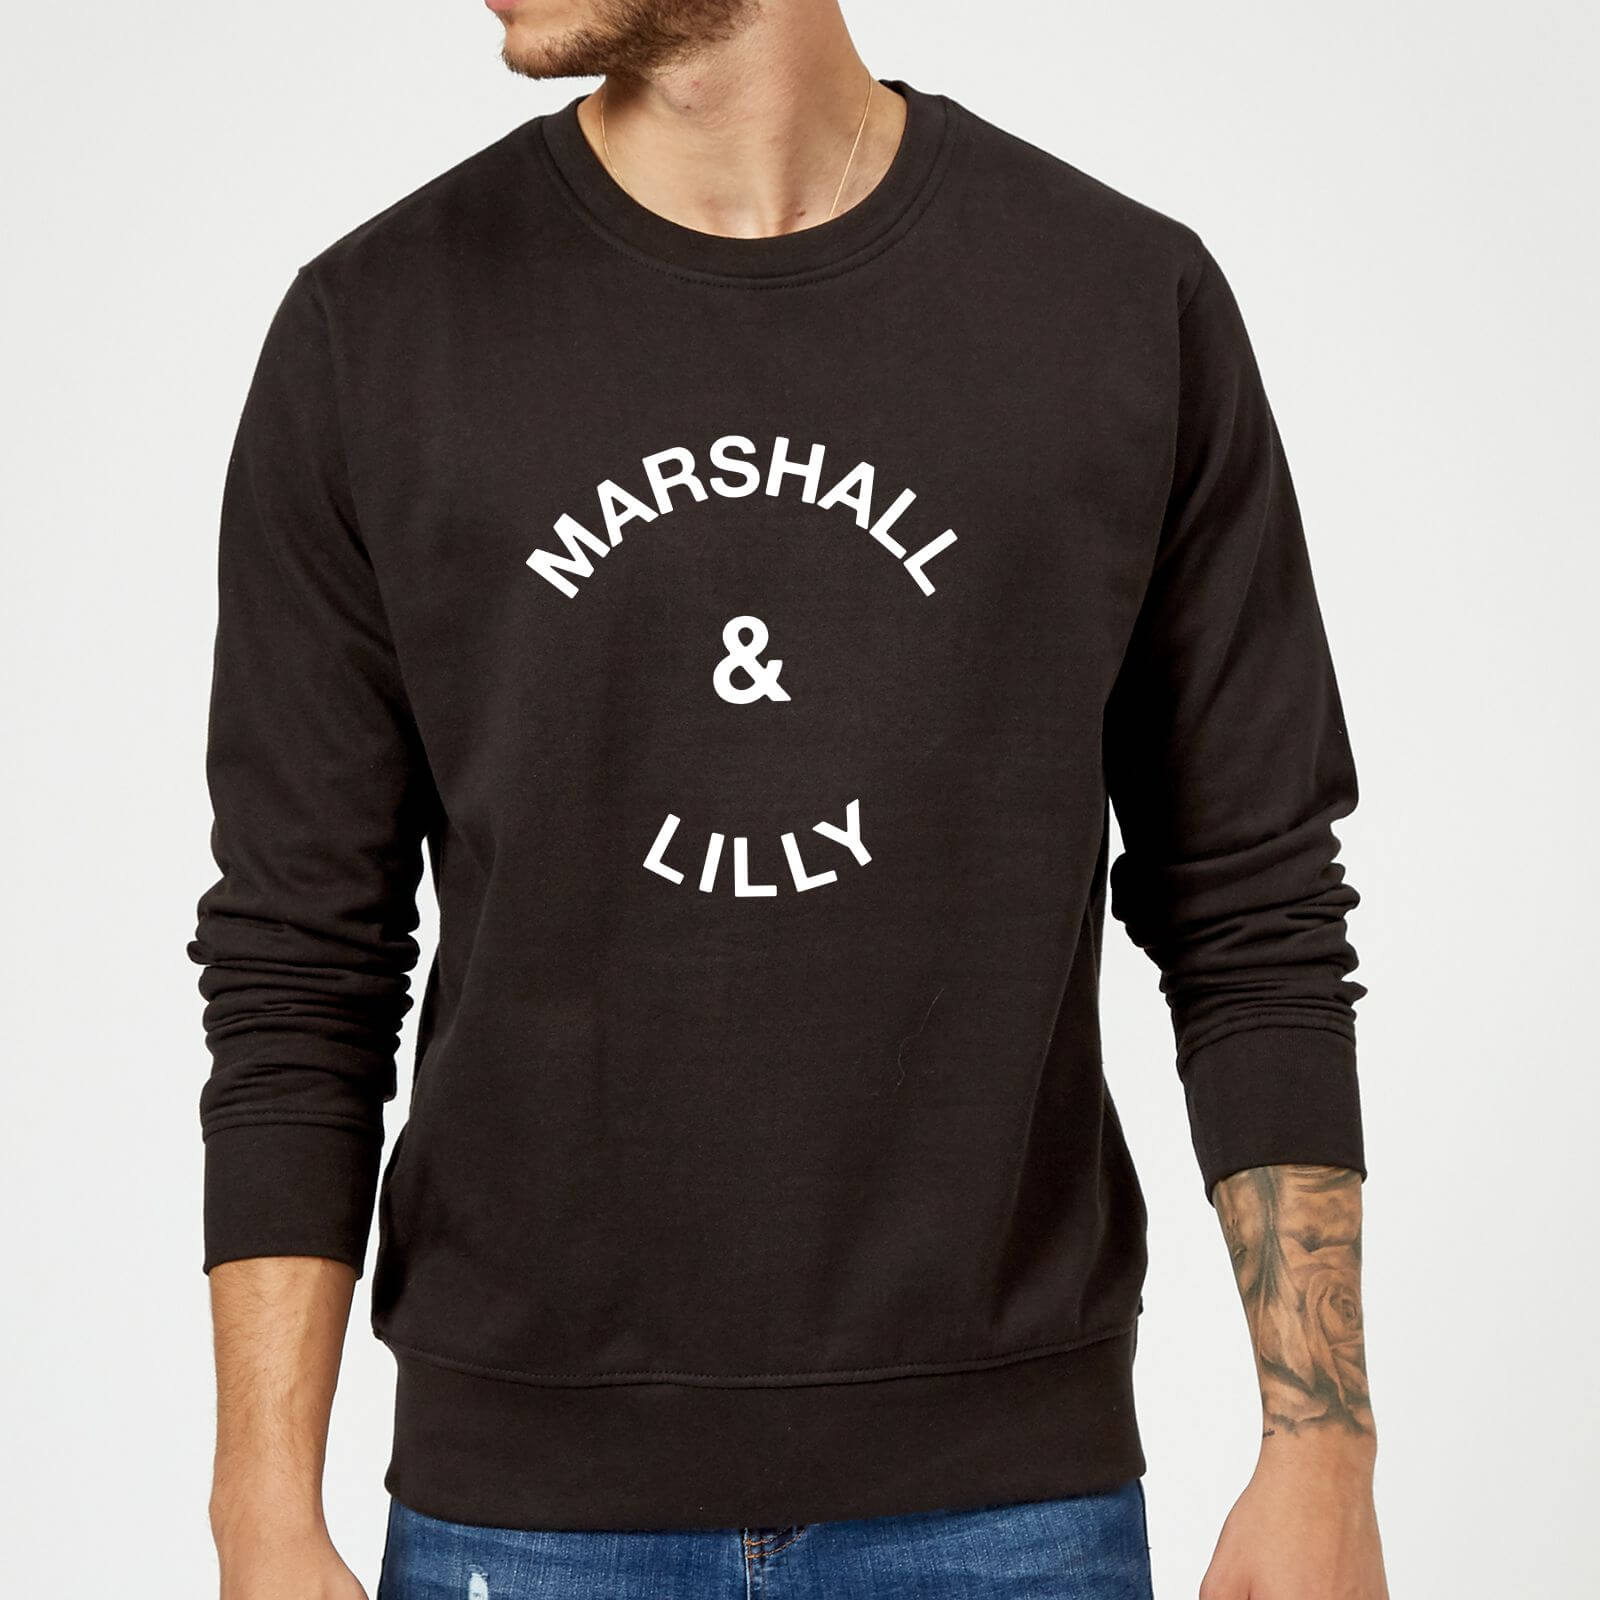 Marshall & Lilly Sweatshirt - Black - L - Black